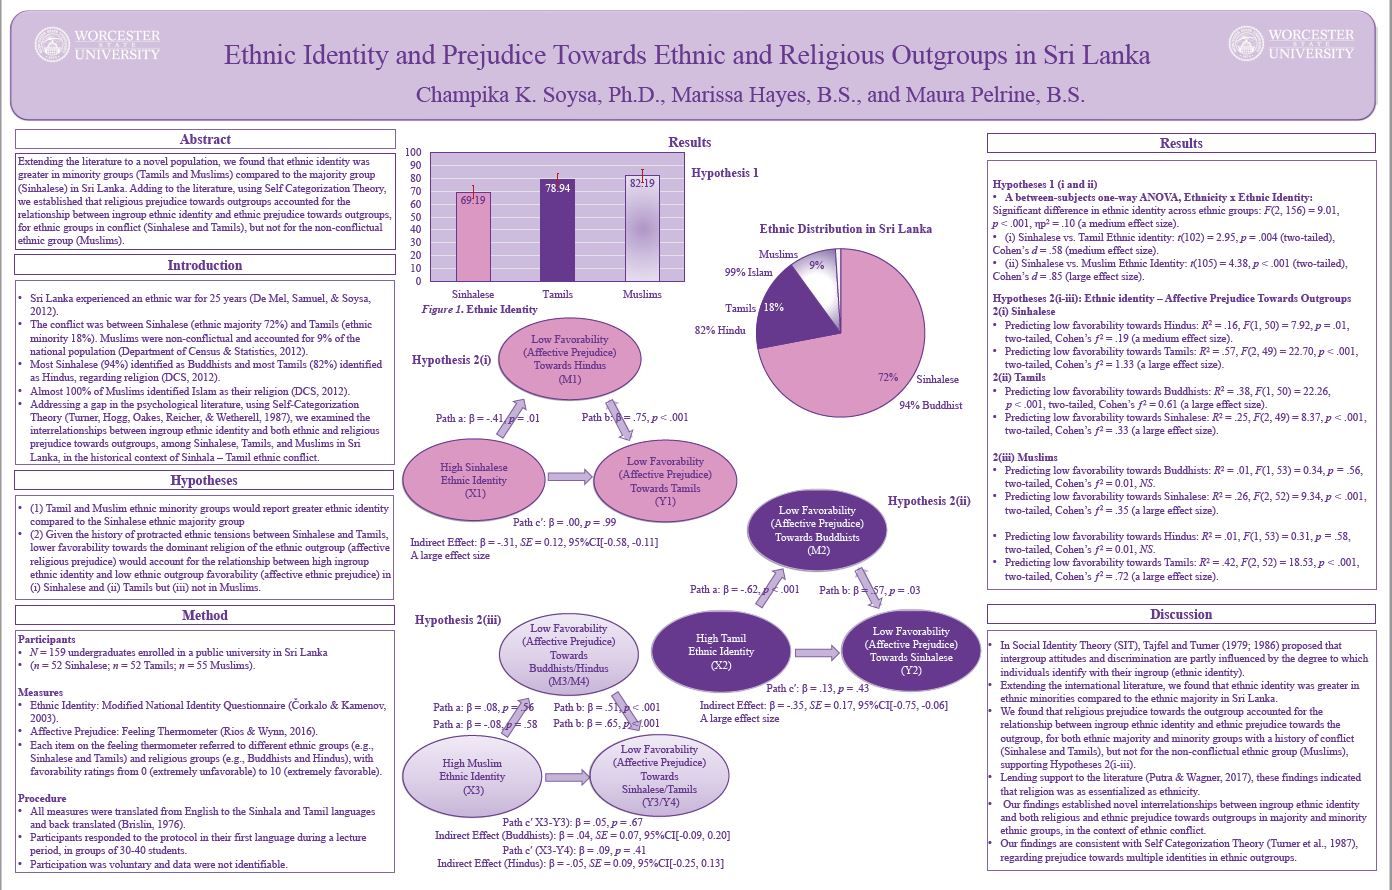 Ethnic Identity and Prejudice Towards Religious Outgroups